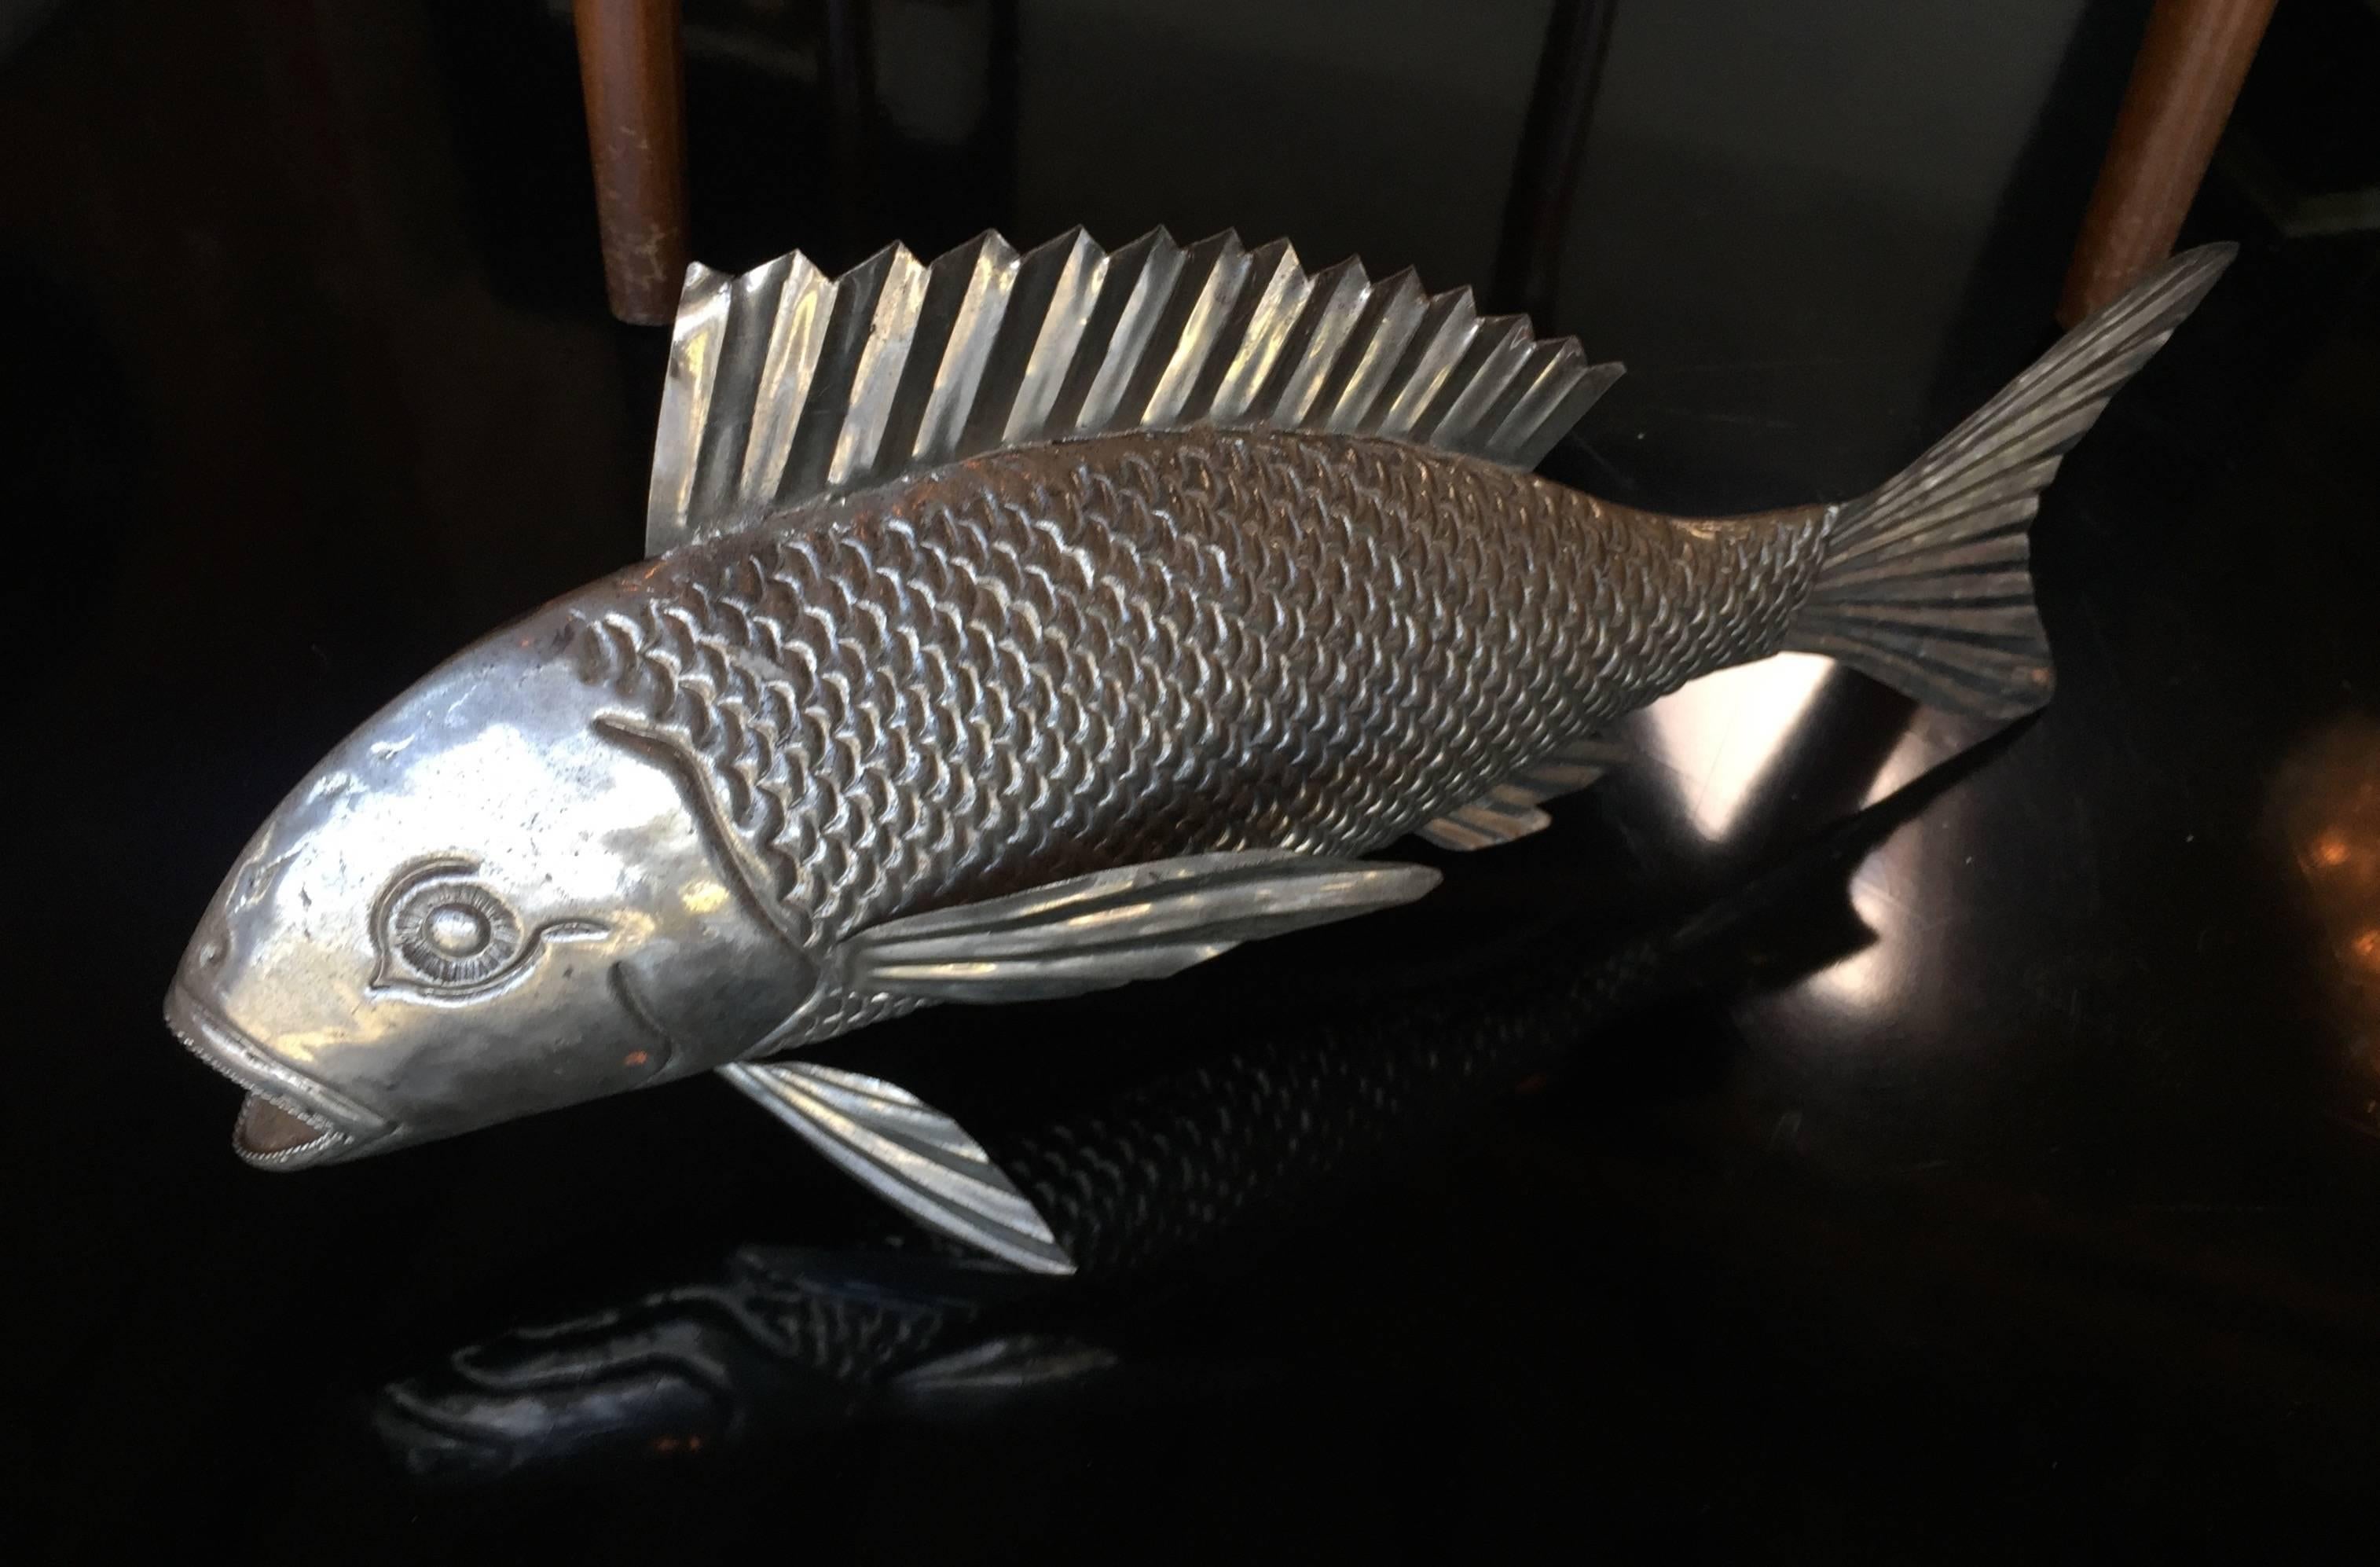 Italian Metal fish sculpture for decoration.
European carp fish sculpture handmade.